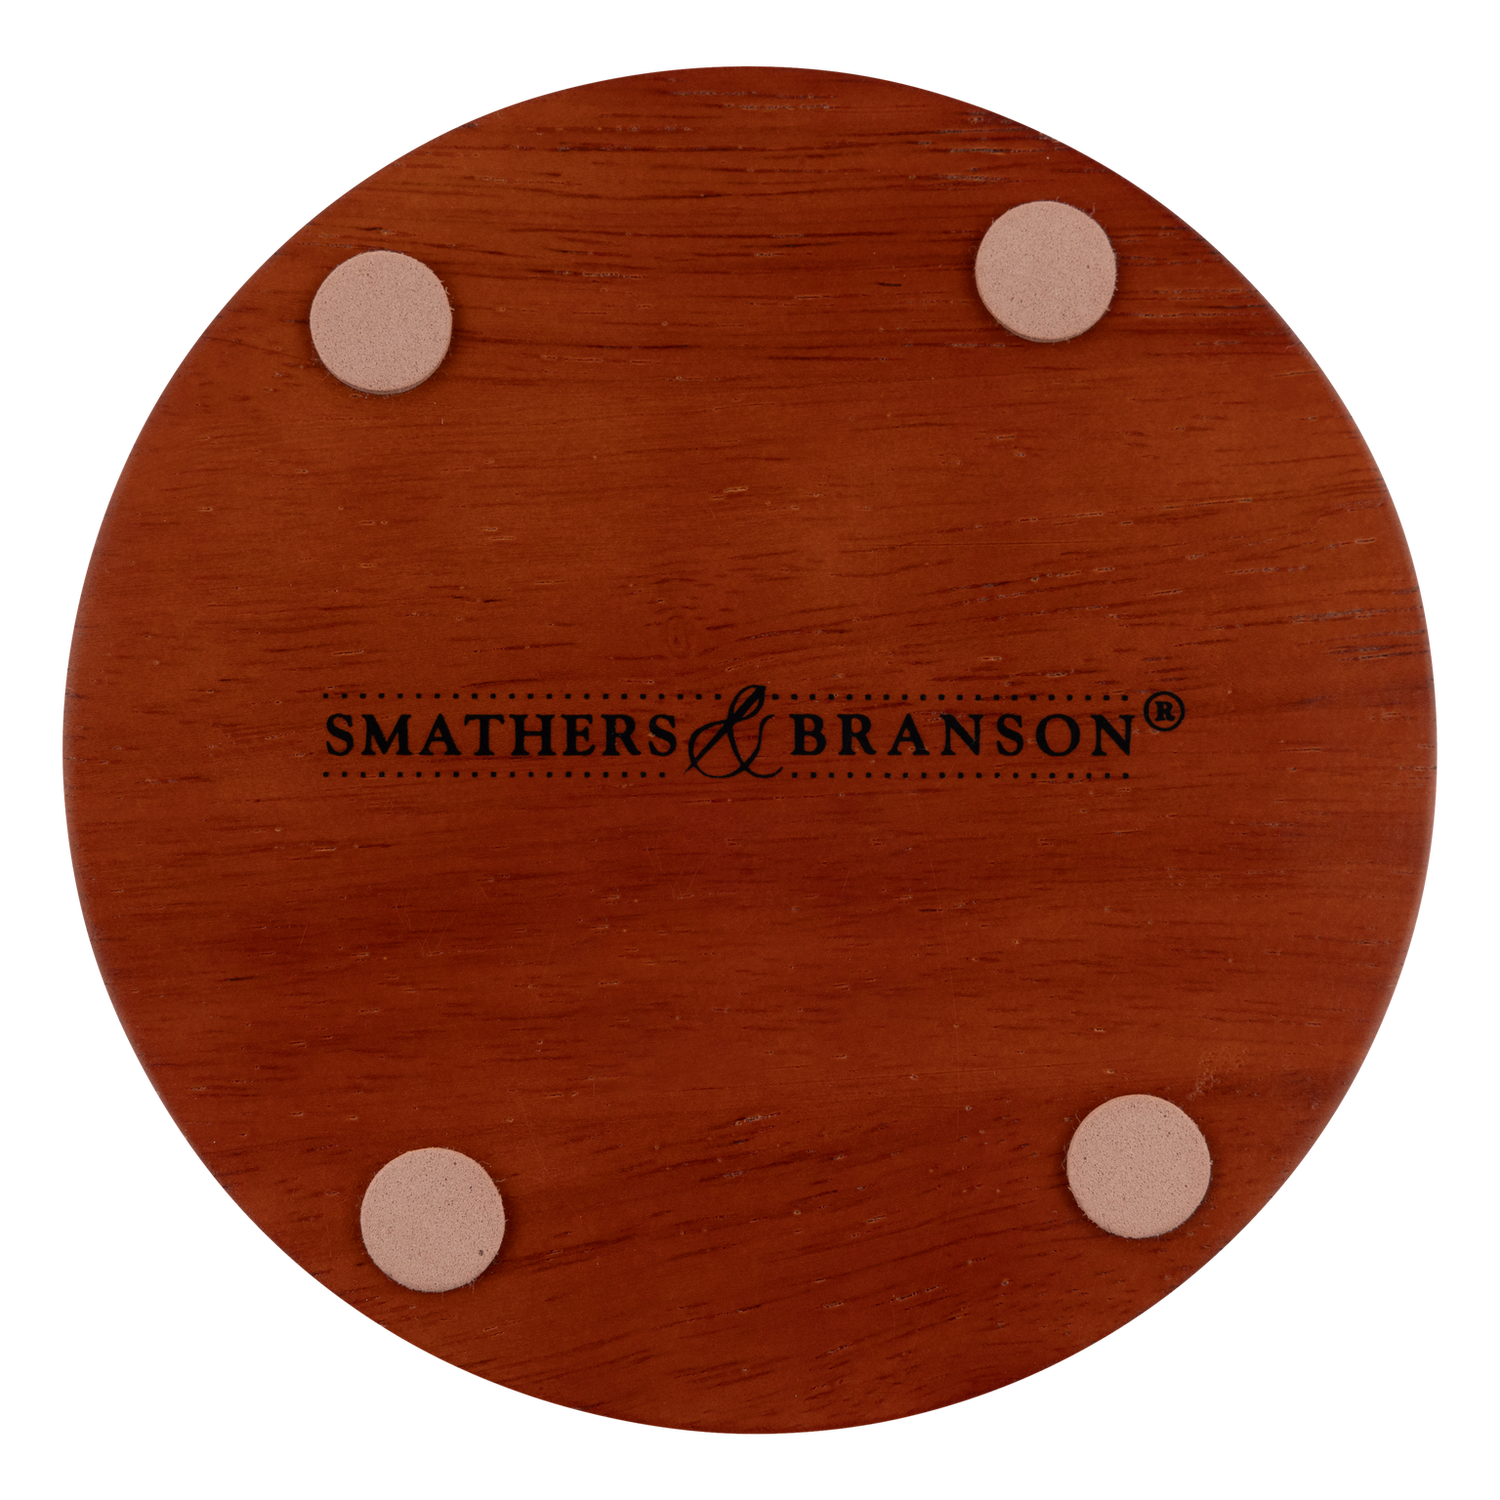 Smathers & Branson Wine Bottle Coasters